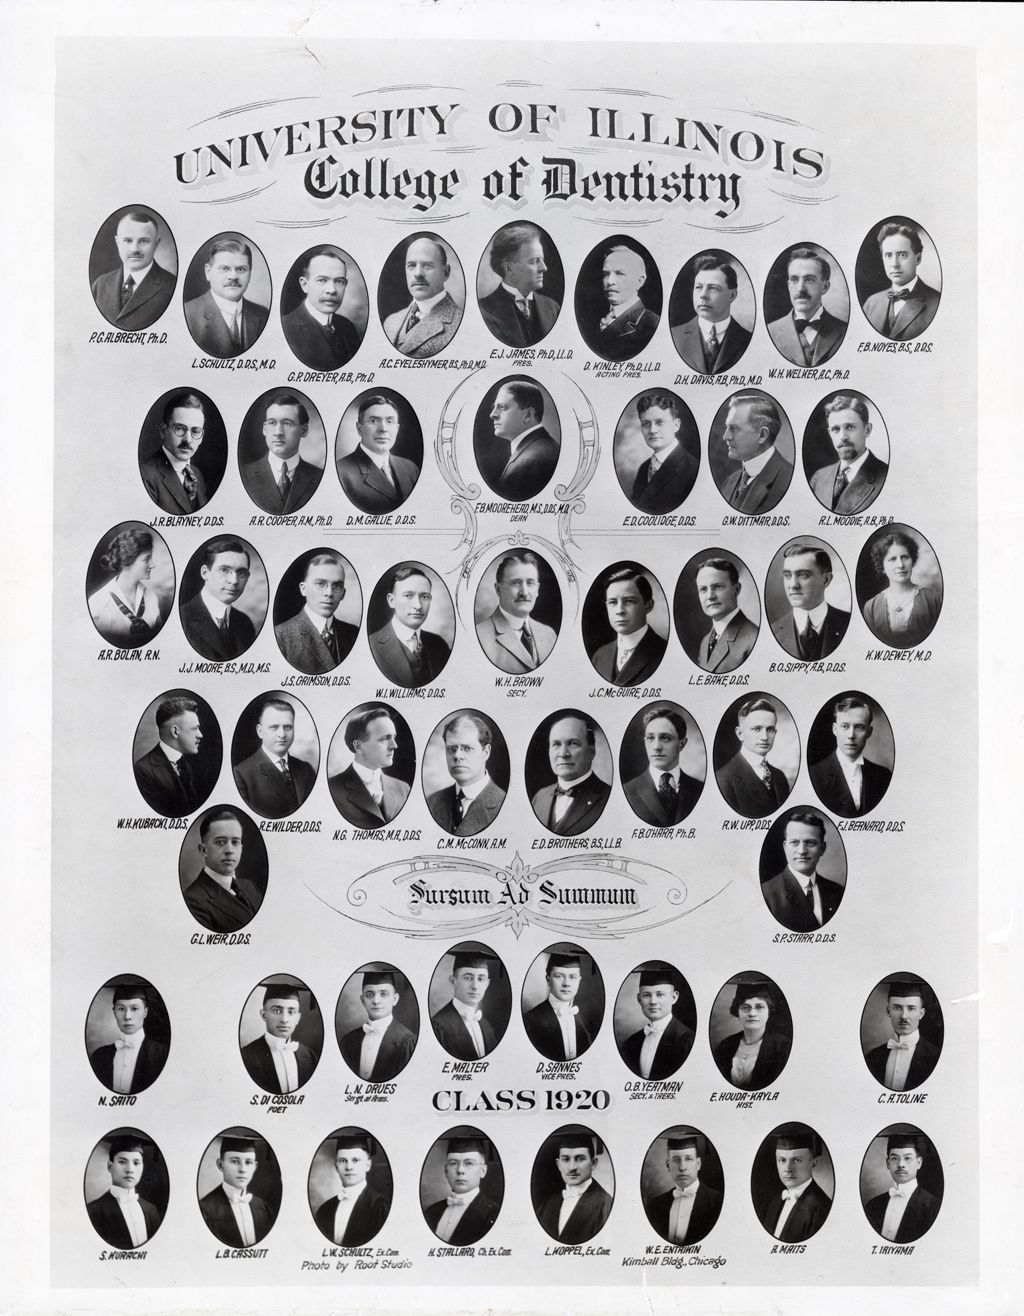 Miniature of 1920 graduating class, University of Illinois College of Dentistry